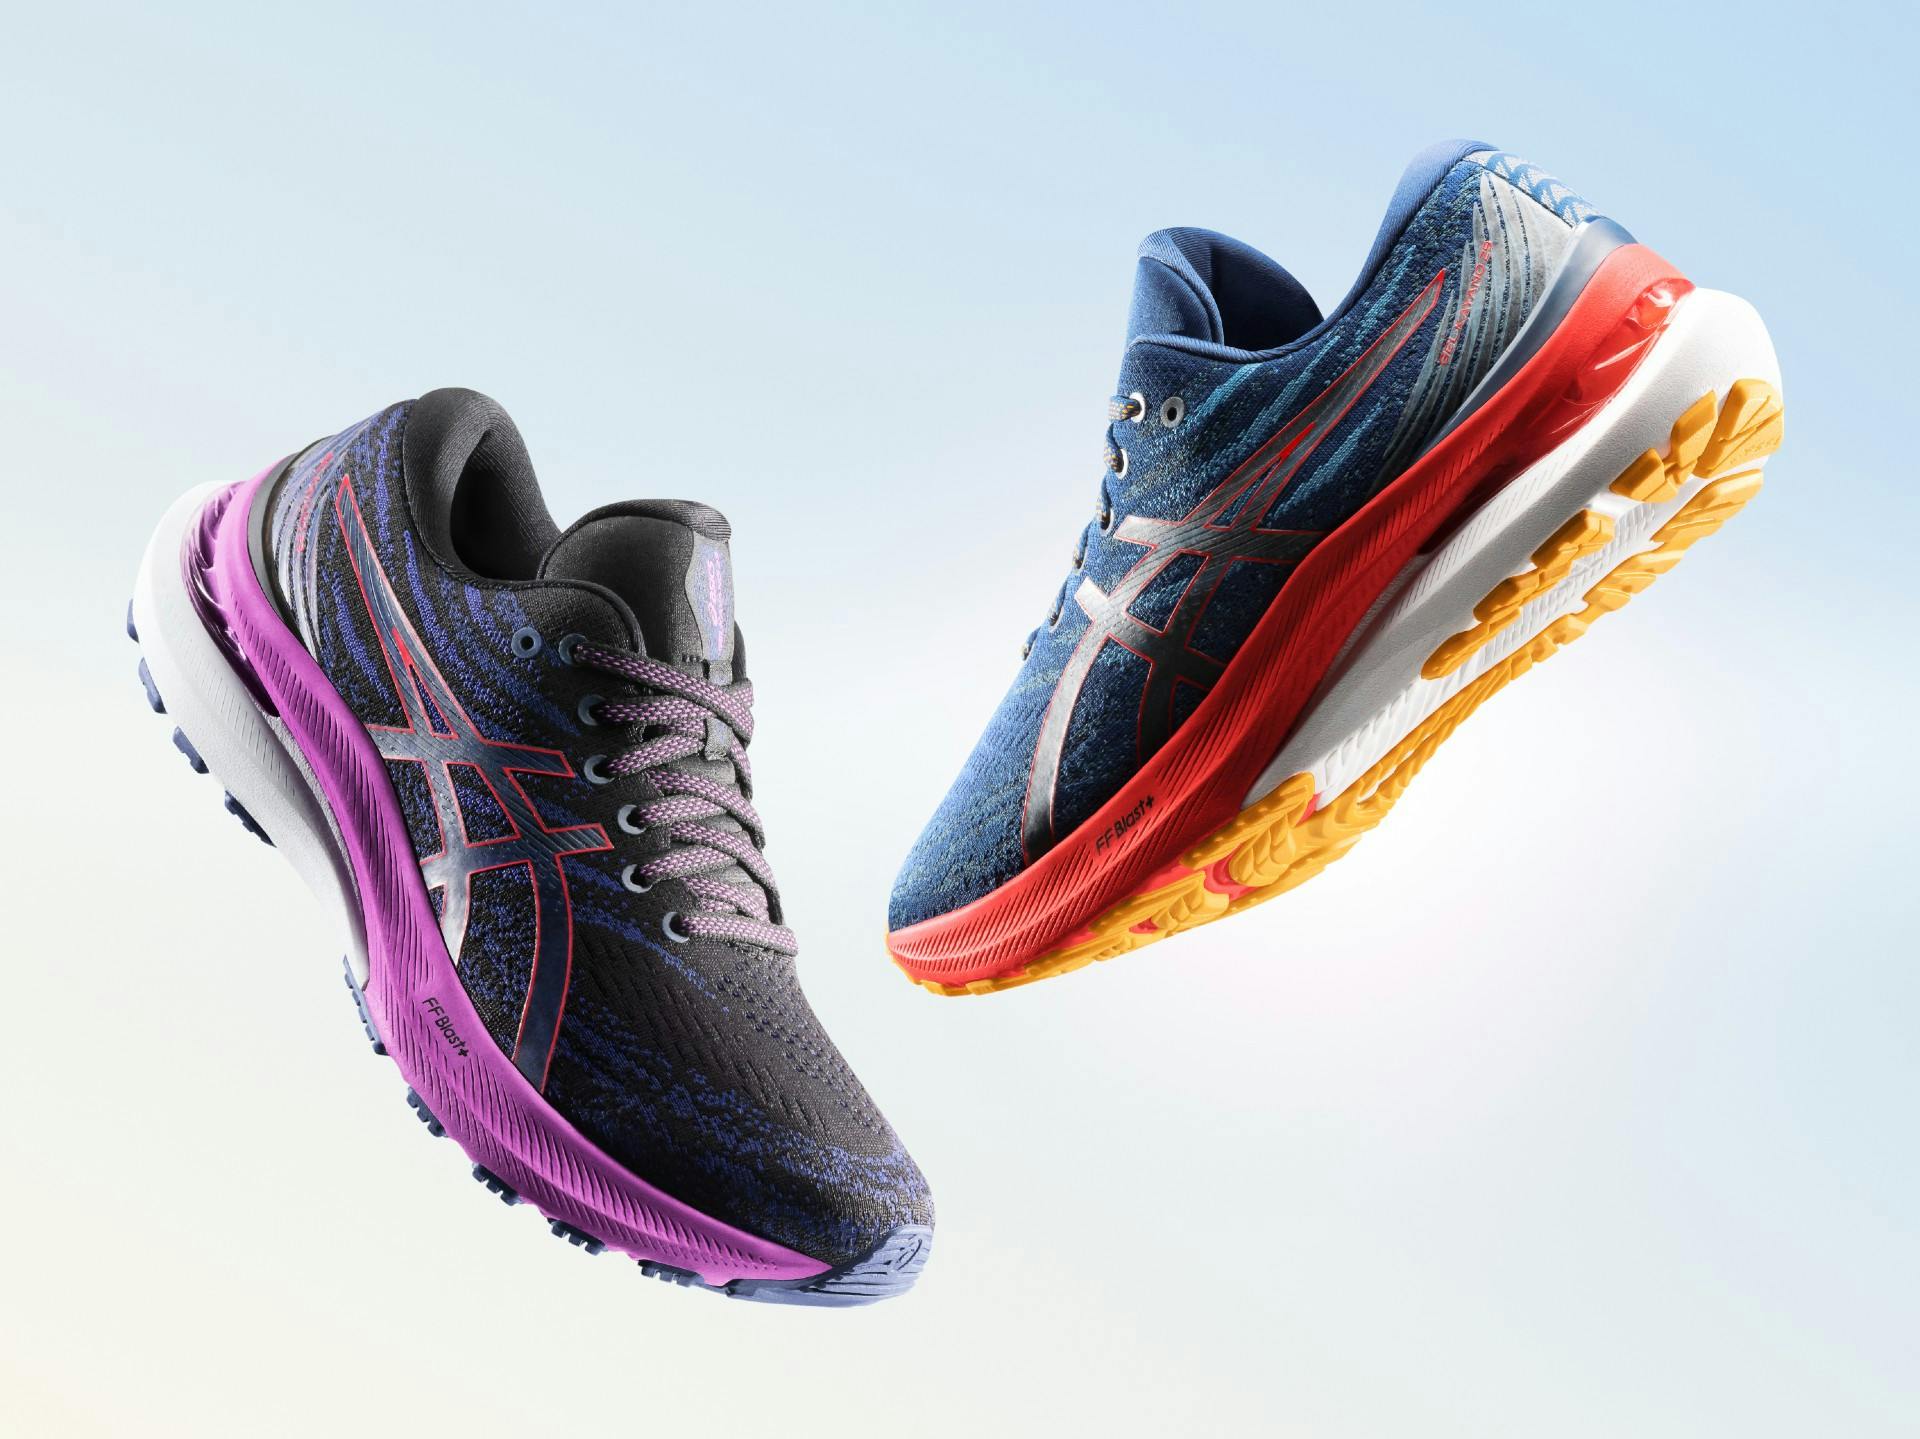 REVIEW: ASICS GEL-KAYANO 29 Road Running Shoes | The Running Hub |  